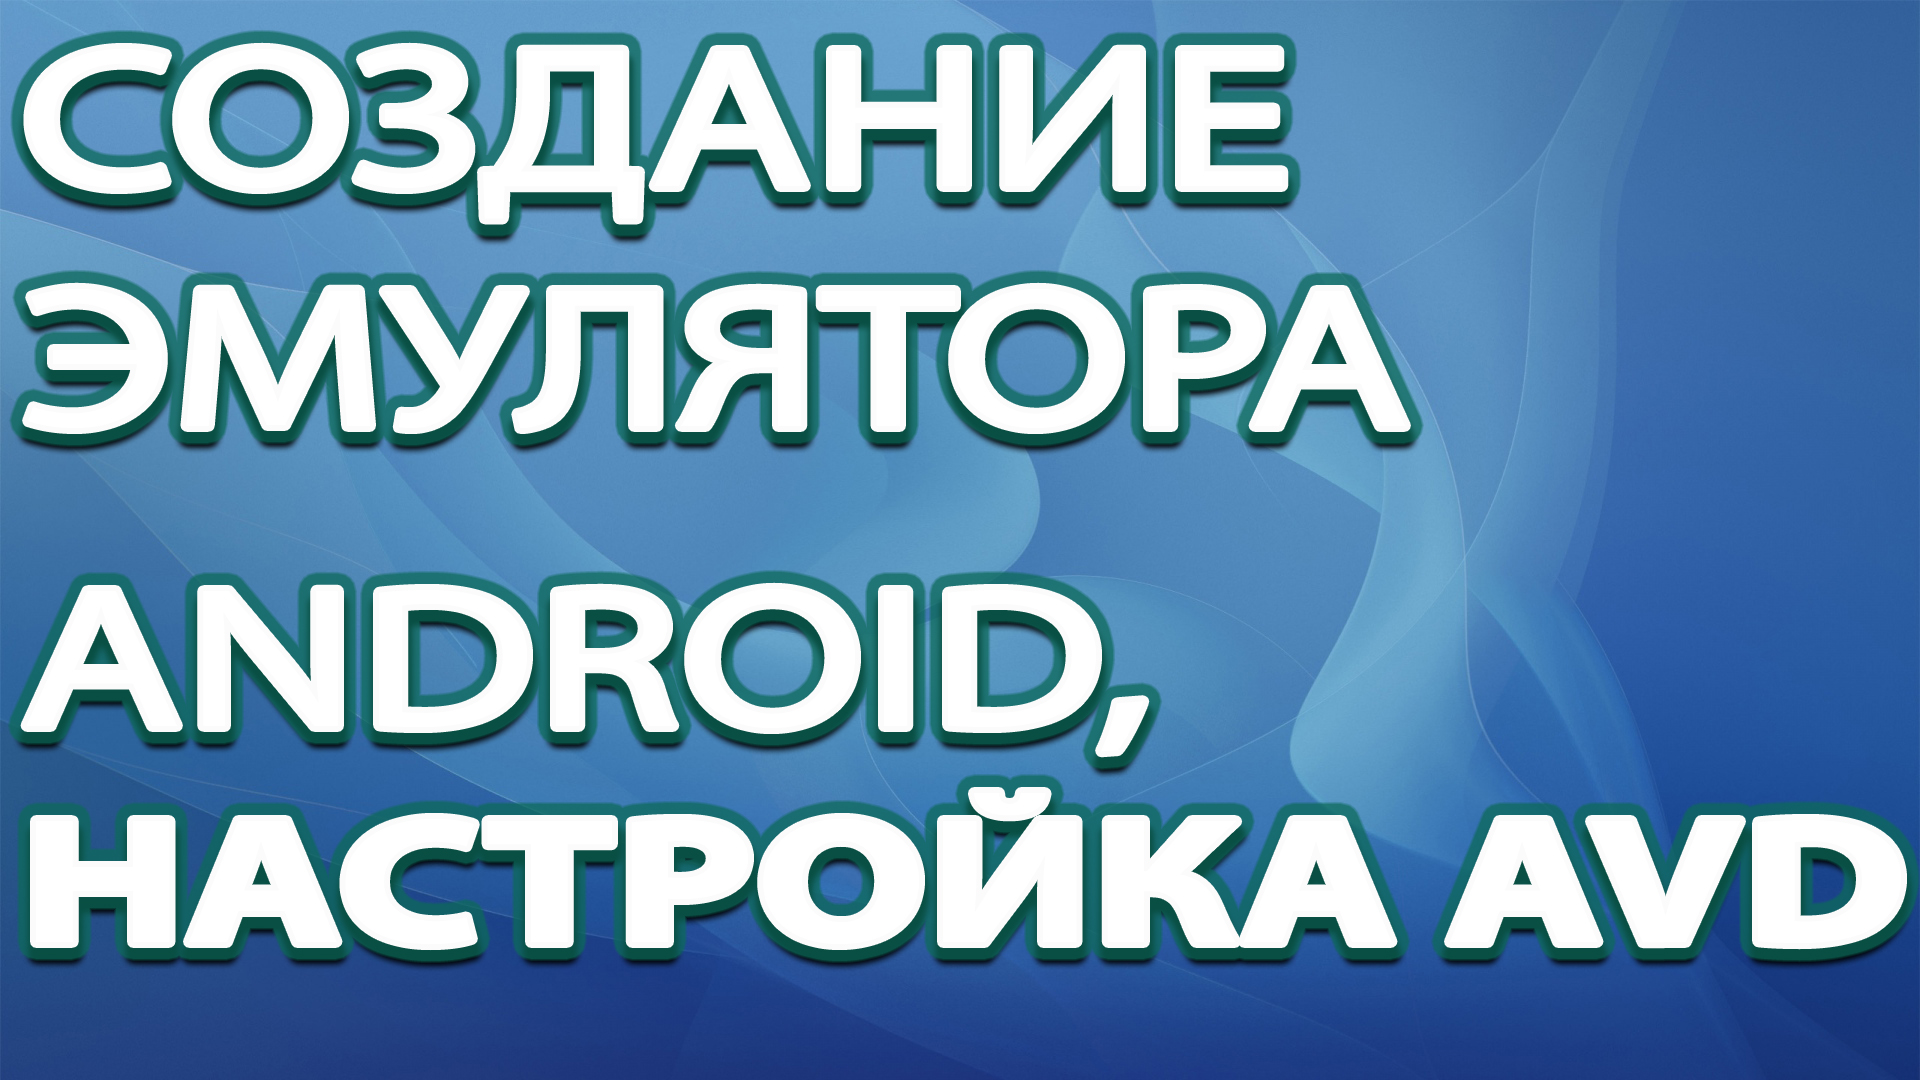 02-Создание эмулятора Android, настройка AVD